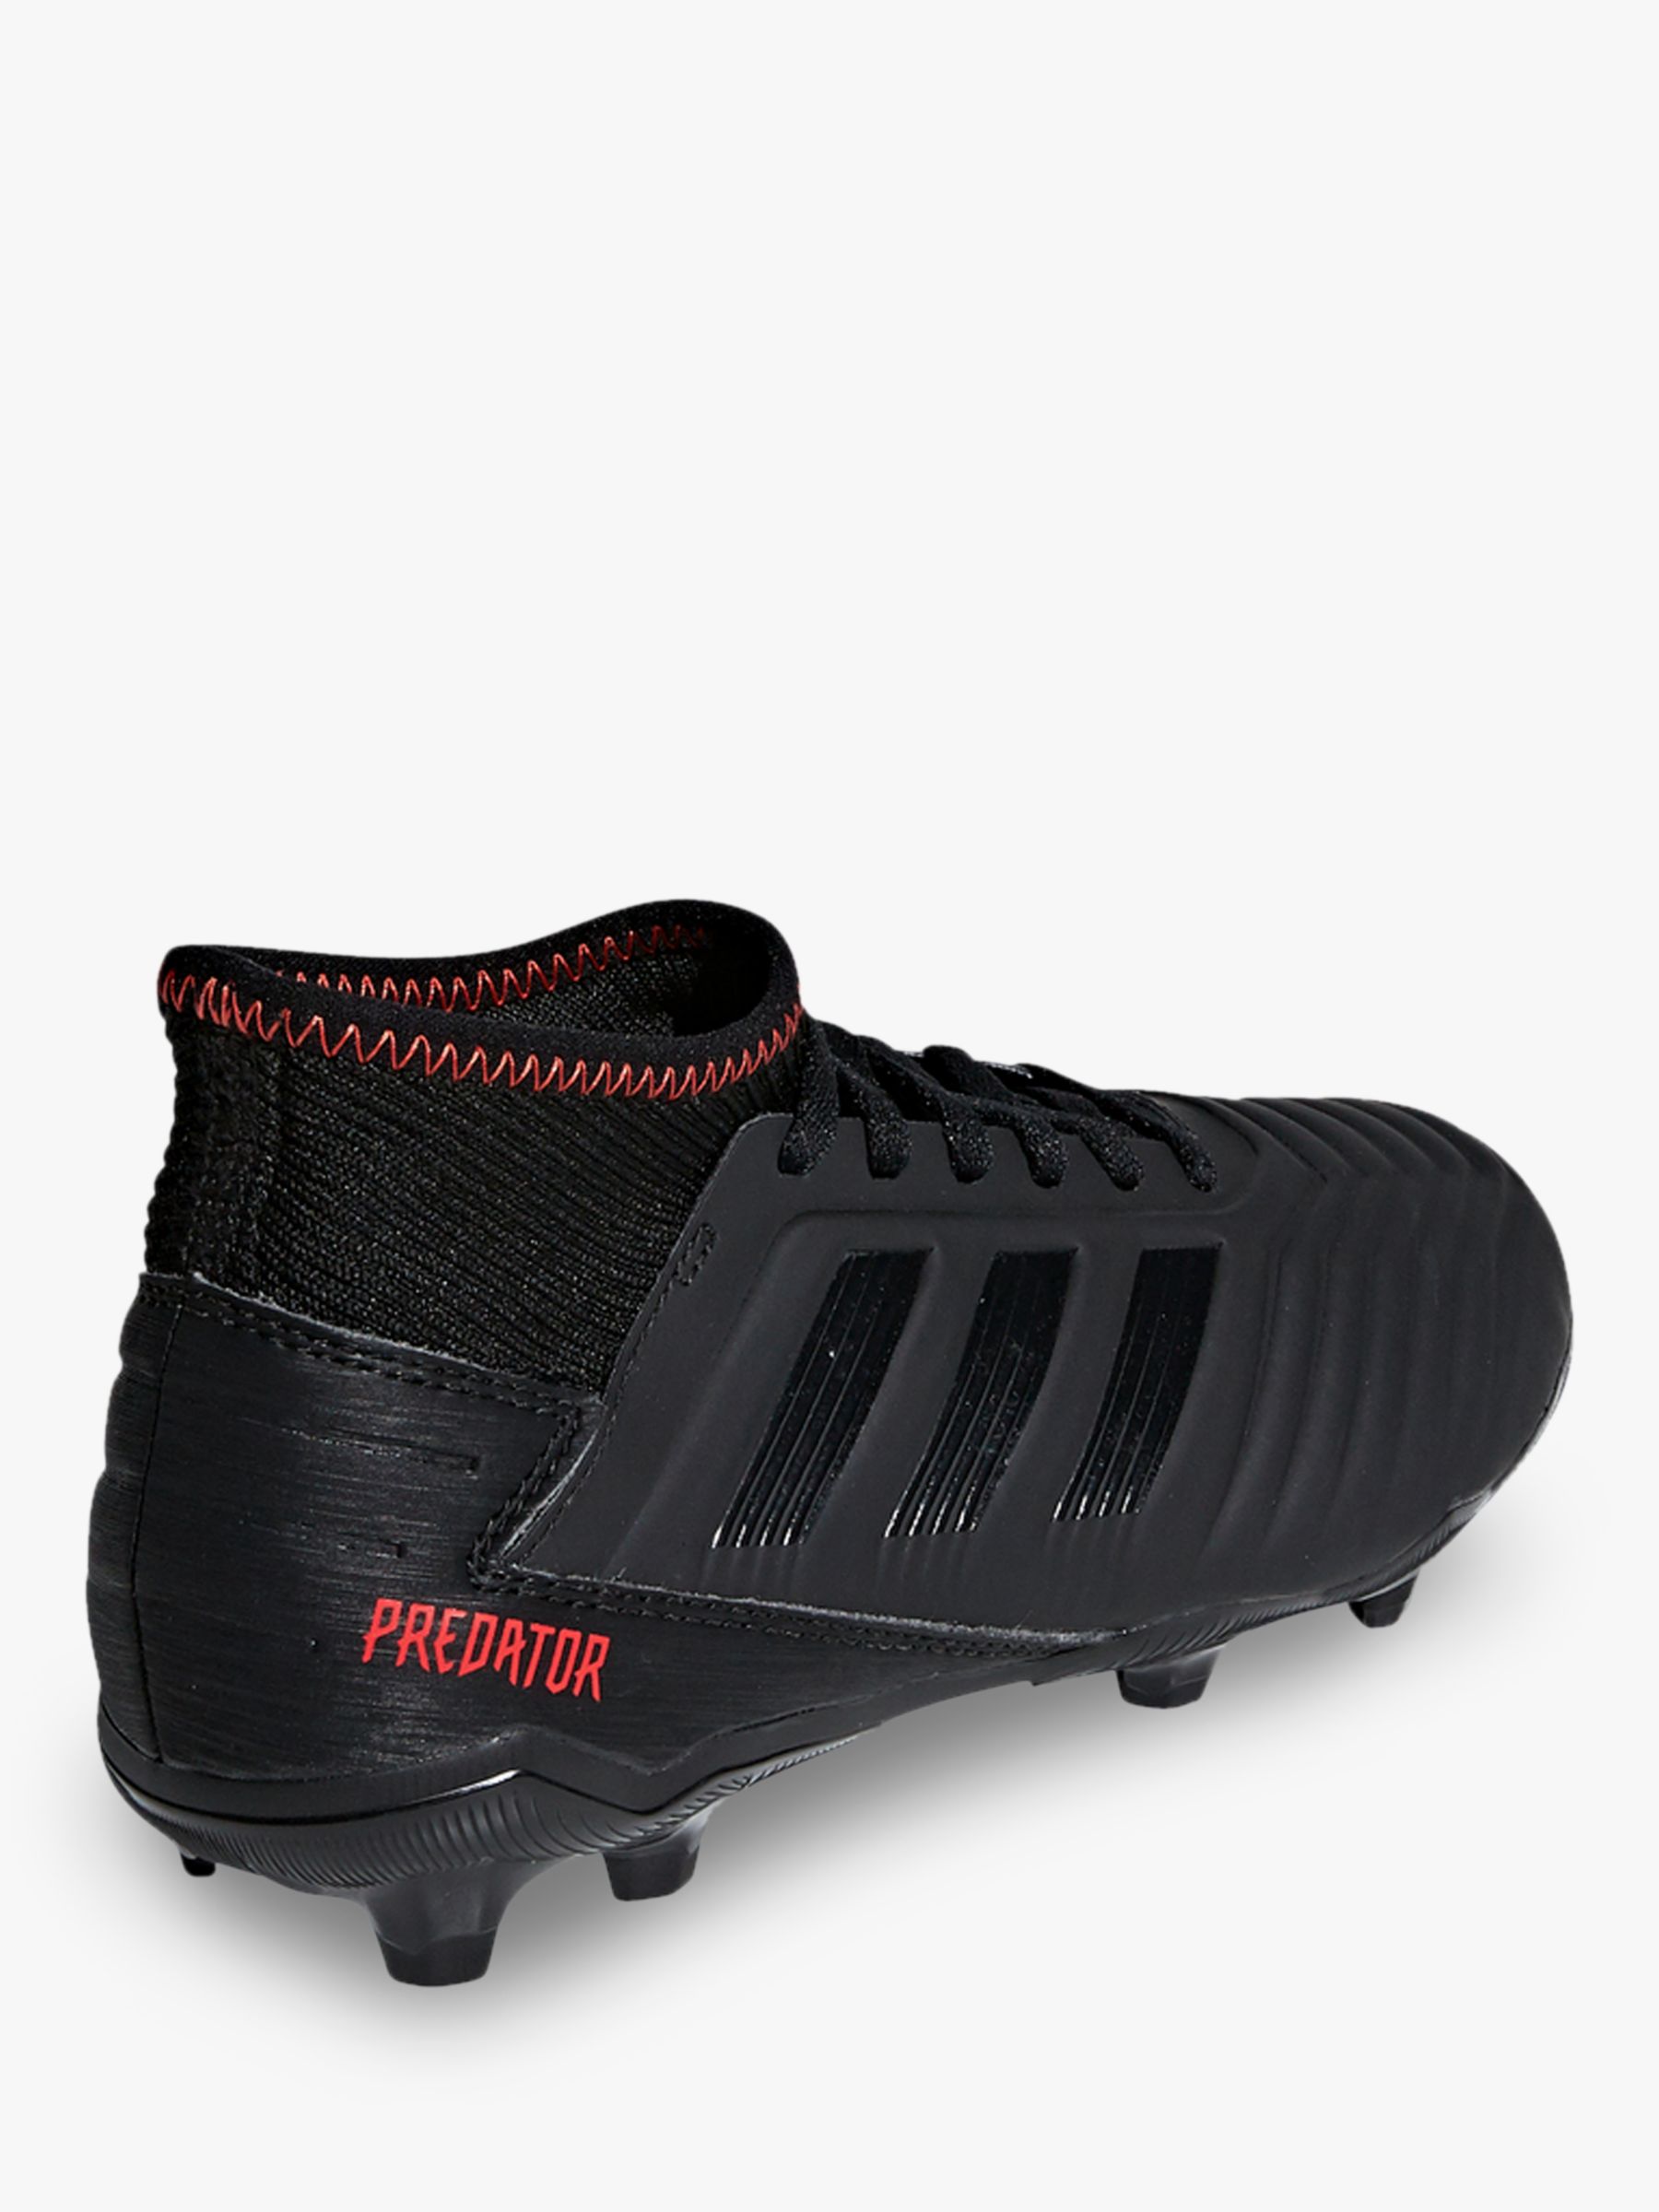 personalised predator football boots